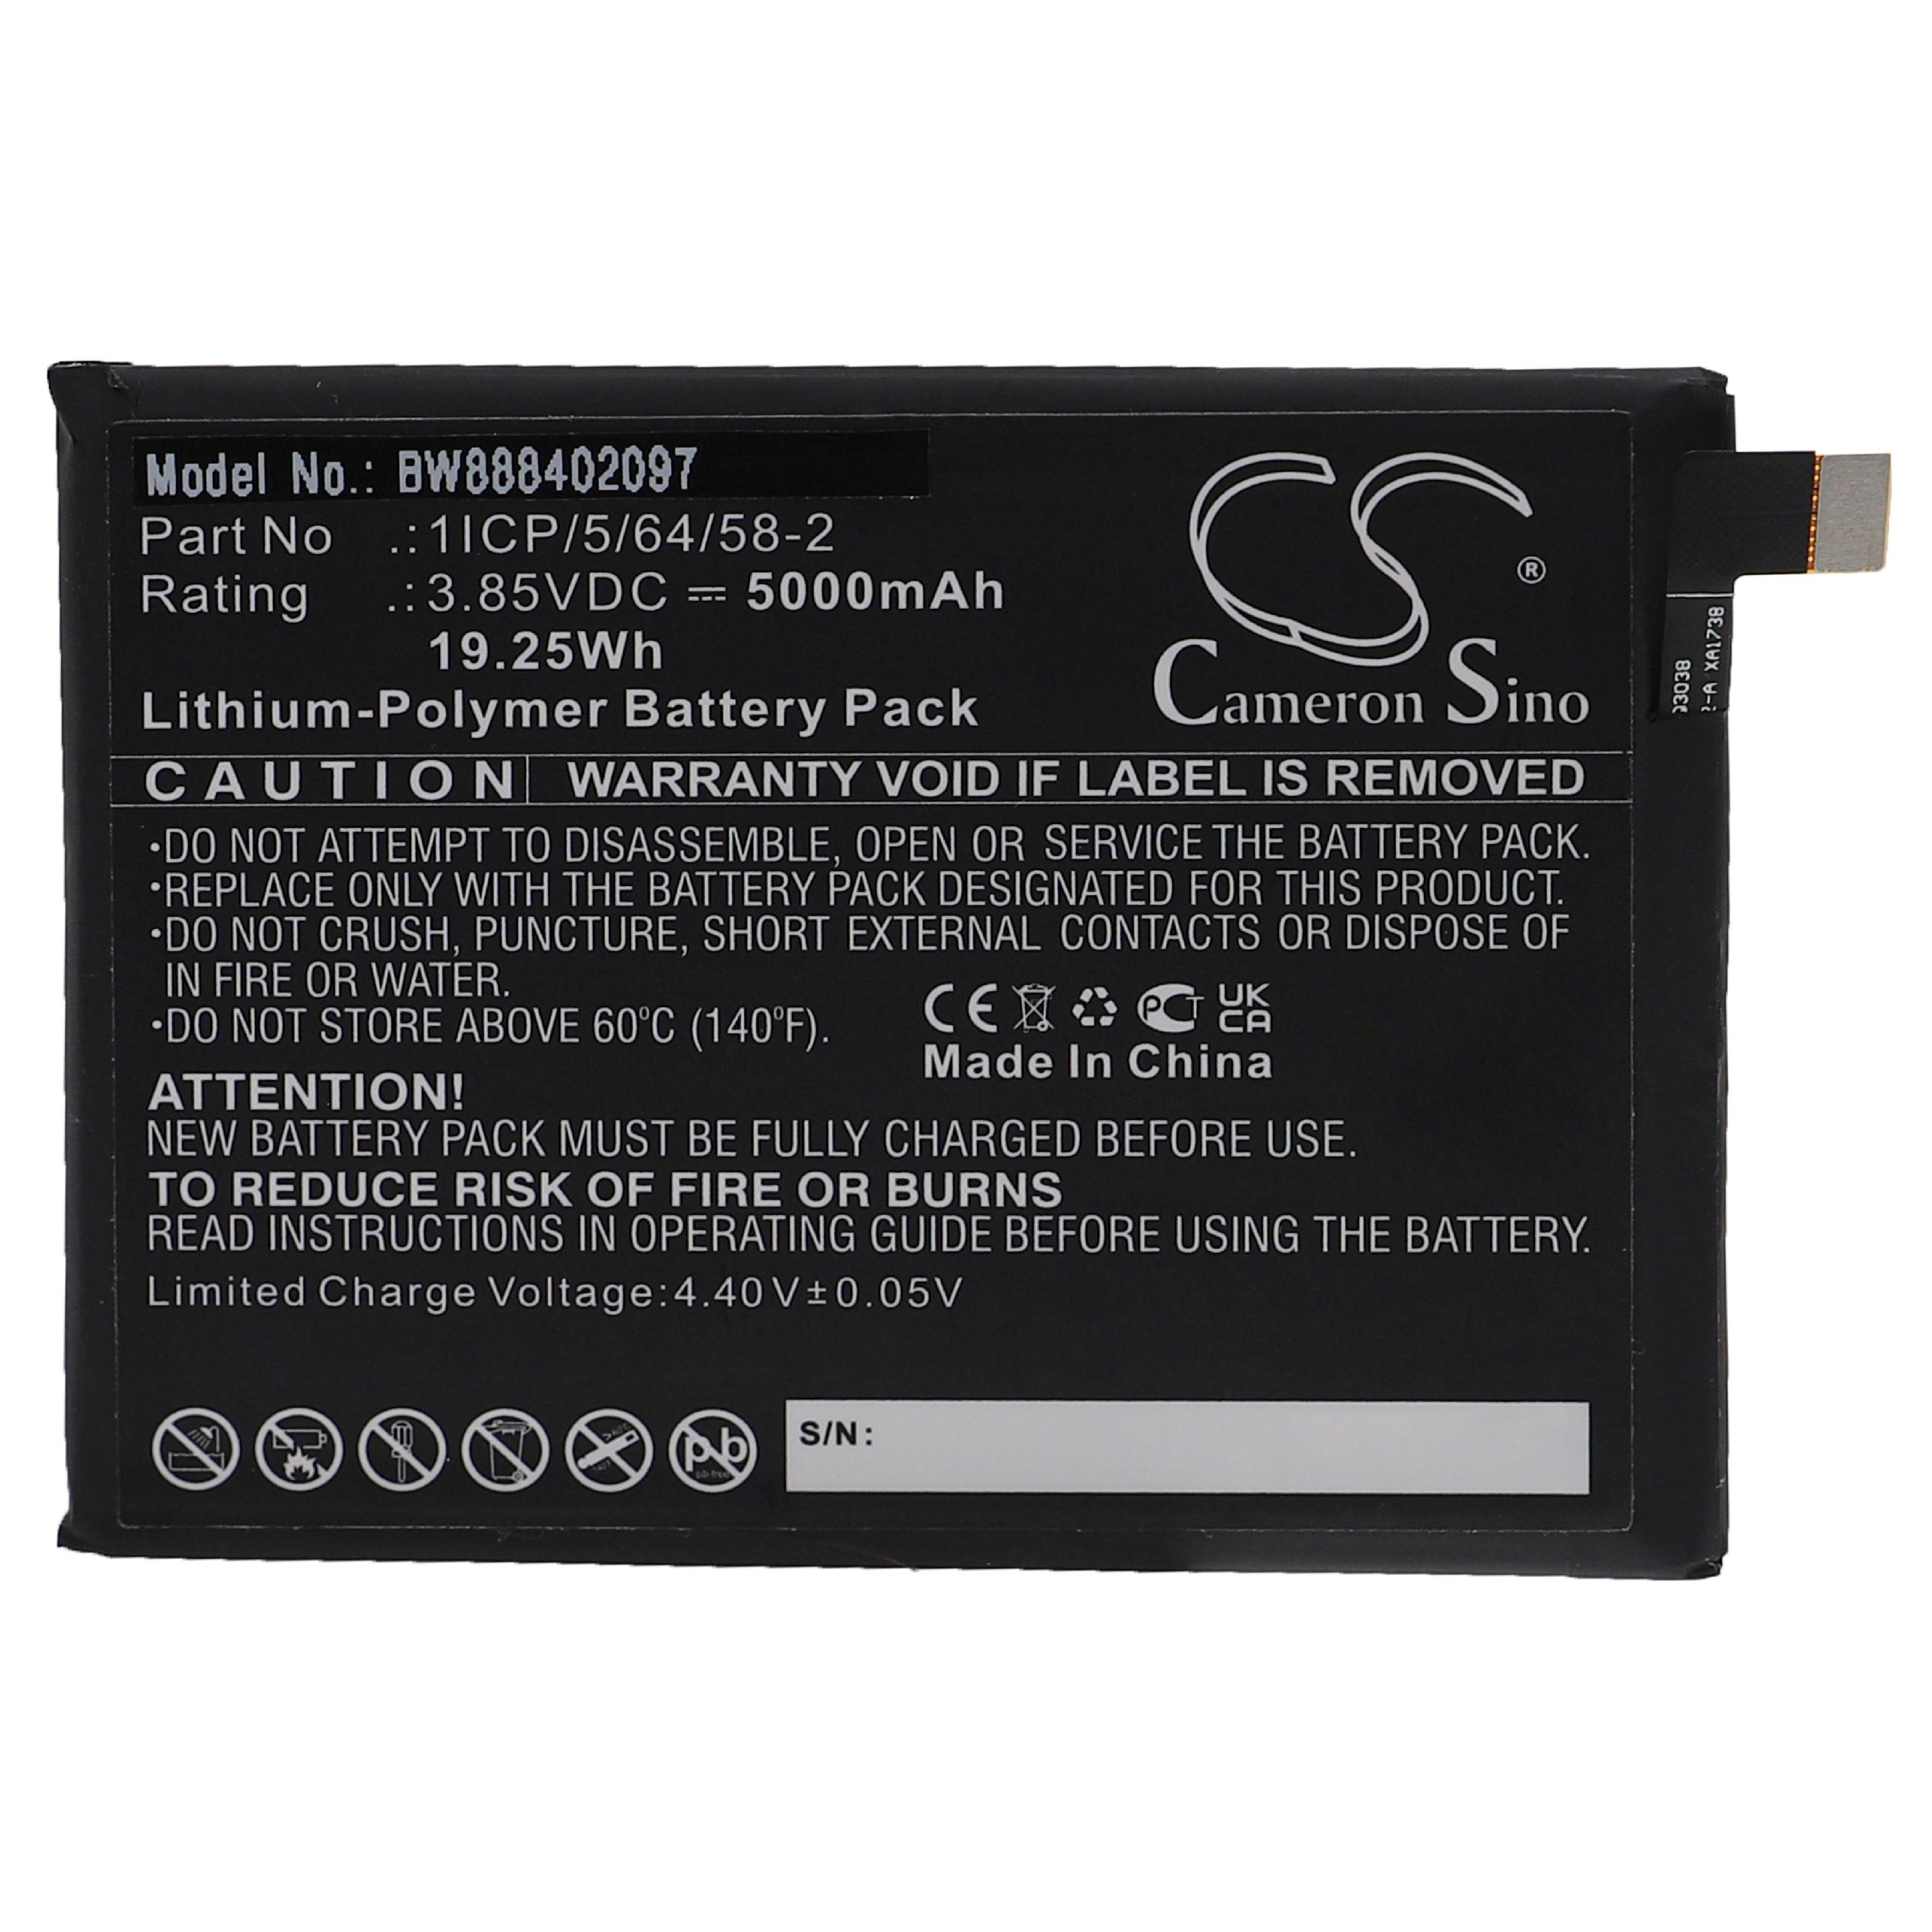 Akumulator bateria do telefonu smartfona zam. Umi 1ICP/5/64/58-2 - 5000mAh, 3,85V, LiPo